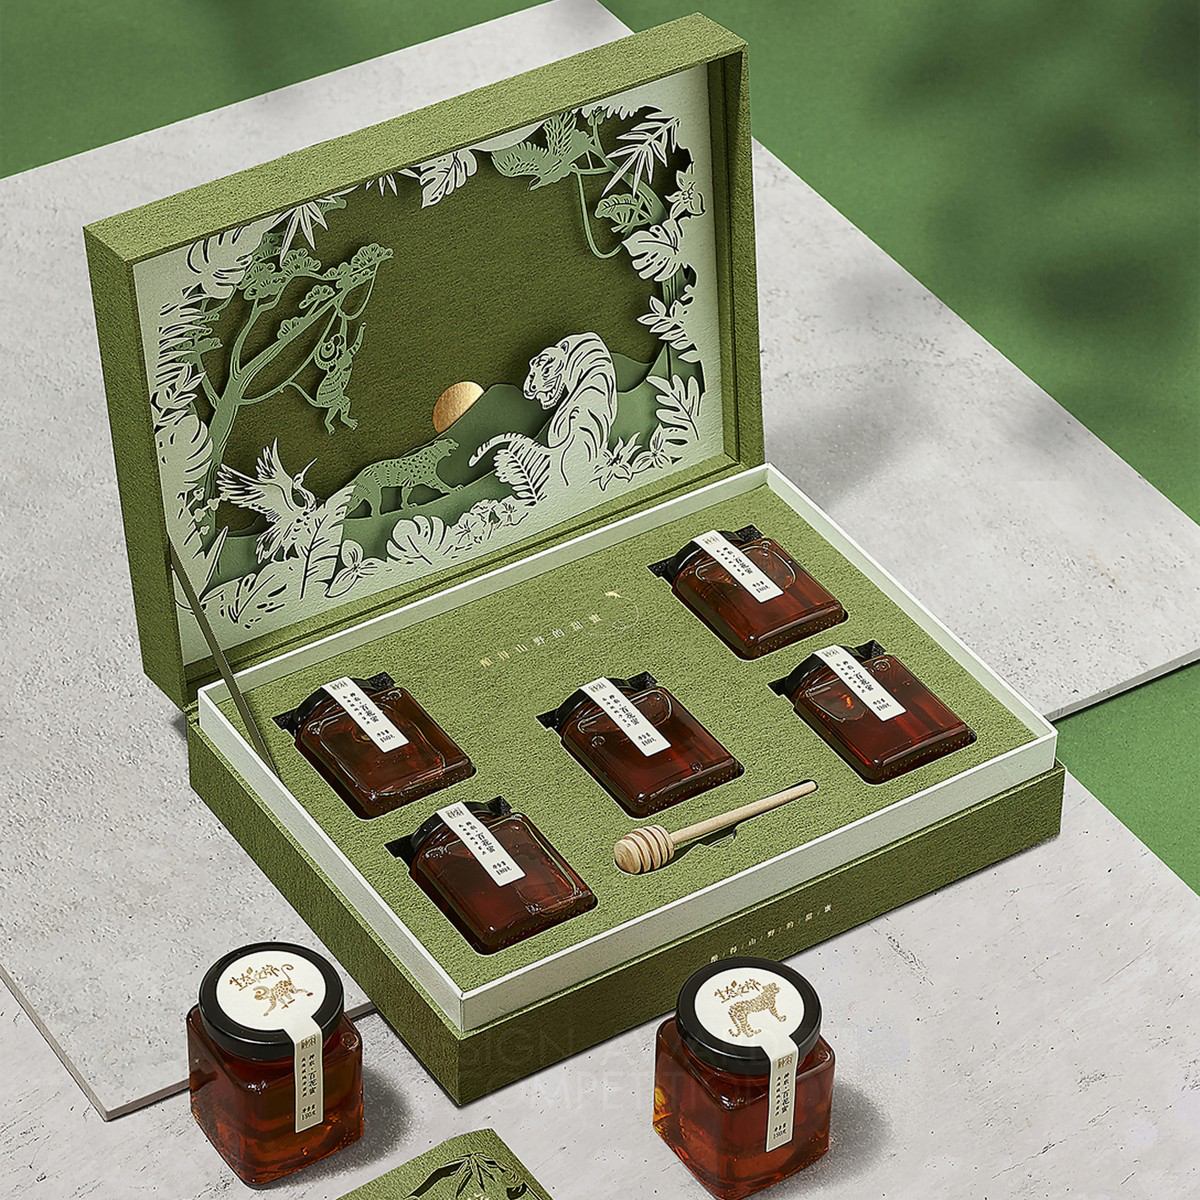 Ecological Journey Gift Box Honey by Pufine Advertising Ltd.Co. Silver Packaging Design Award Winner 2020 